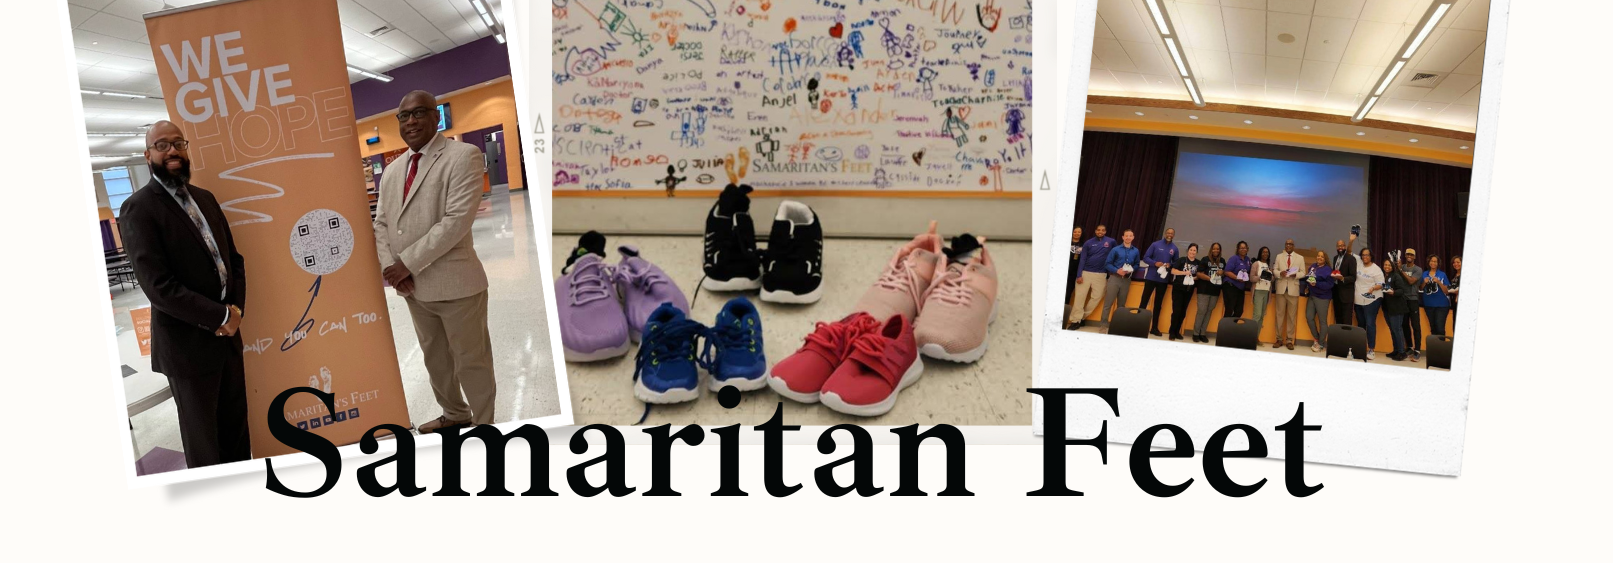 Samaritan Feet gave away free shoes to students! 